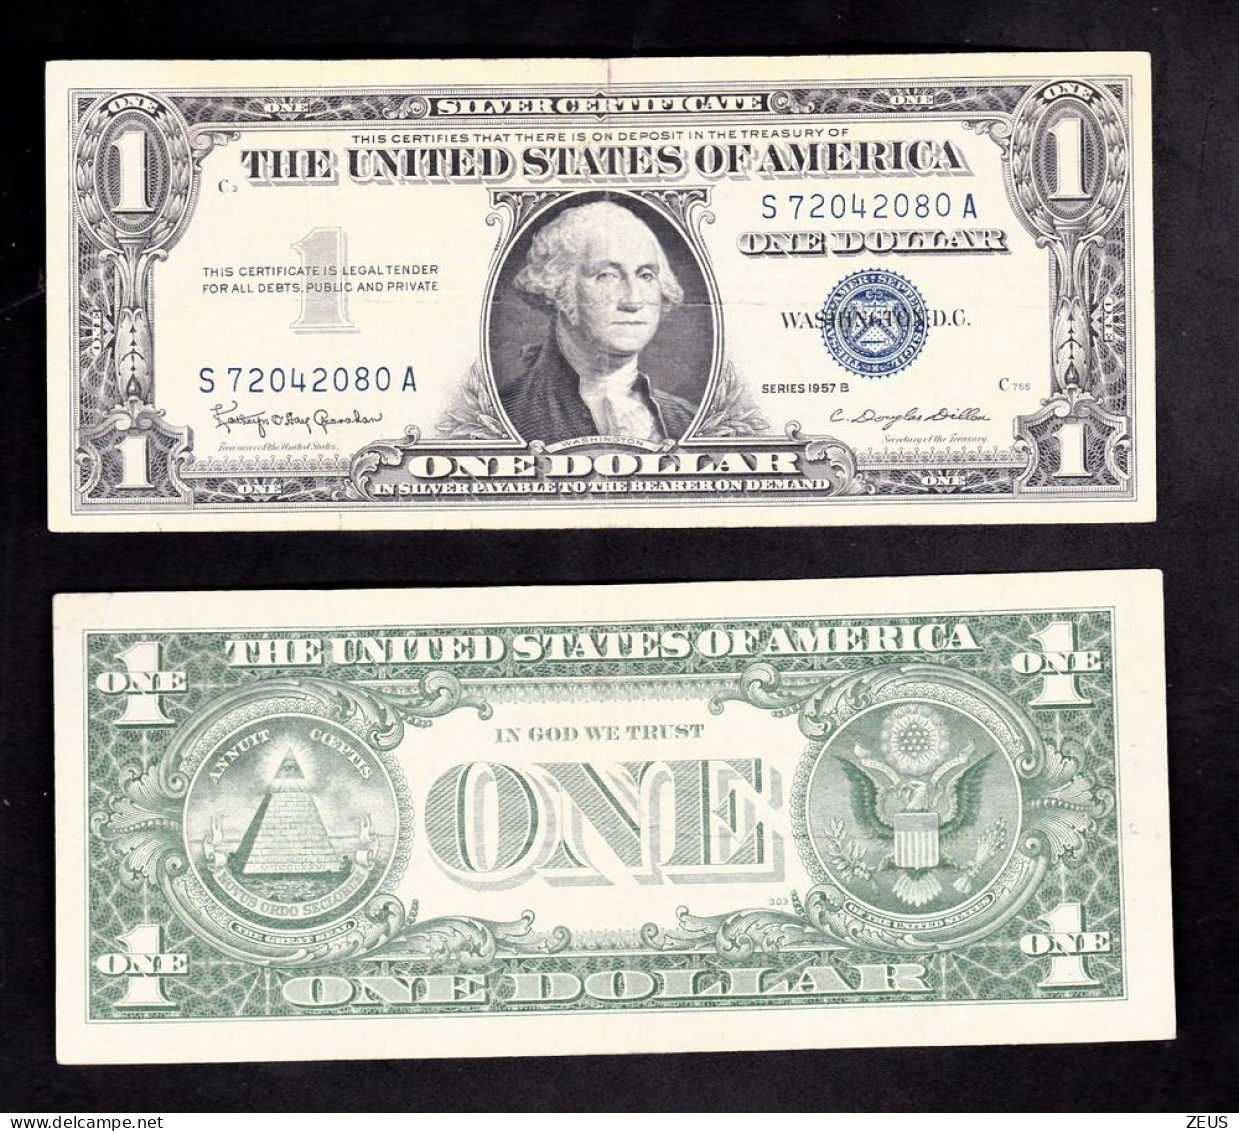 USA 1 DOLLARO 1957  PIK 419B BB - Biljetten Van De Verenigde Staten (1928-1953)